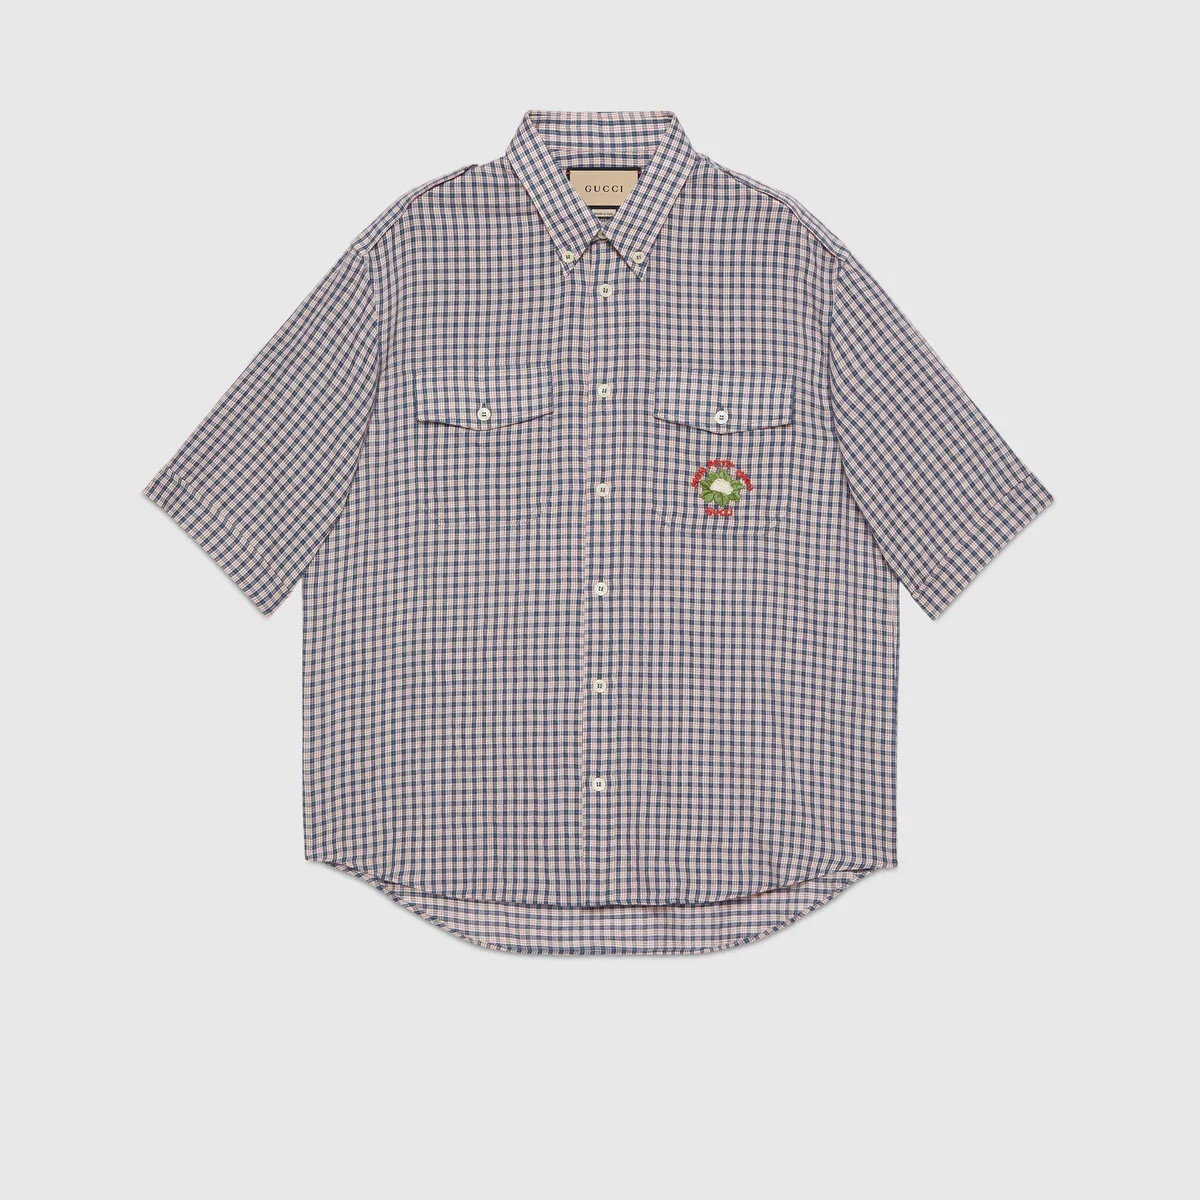 Micro check shirt with Gucci cauliflower - 1